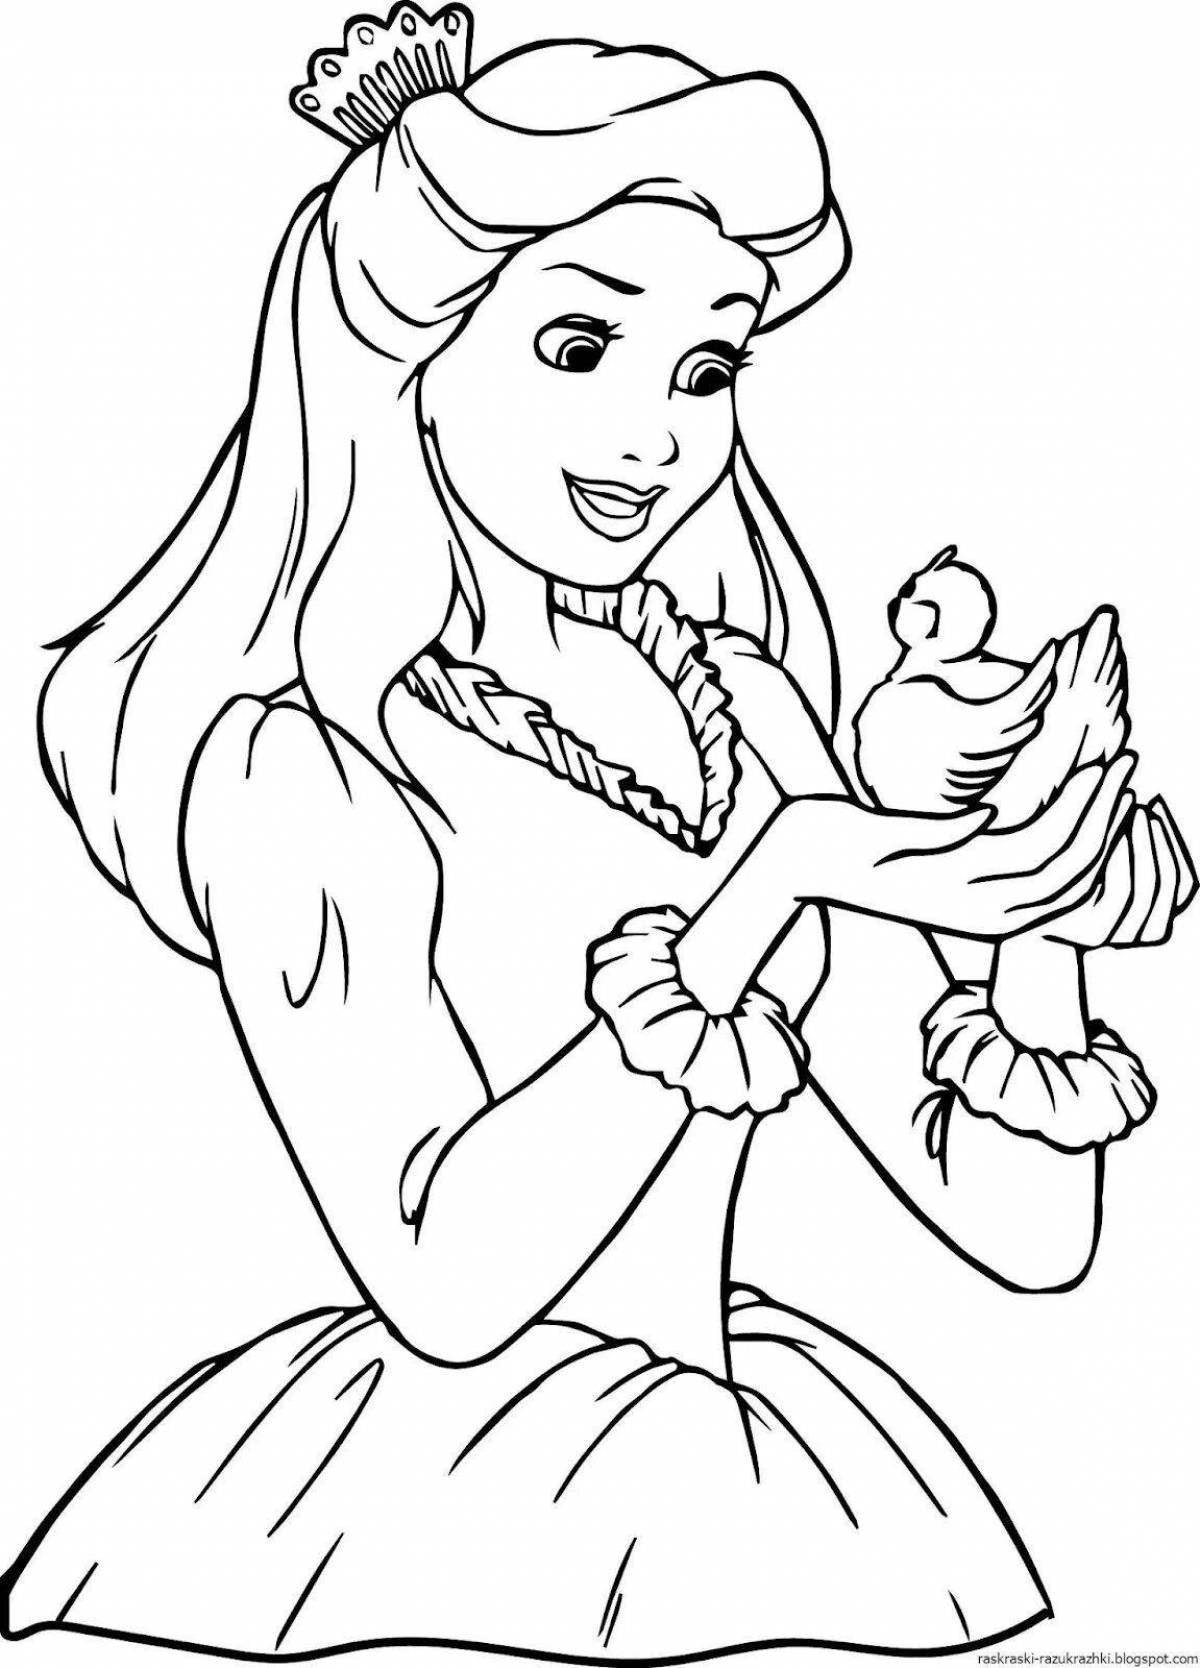 Disney princess glitter coloring book for kids